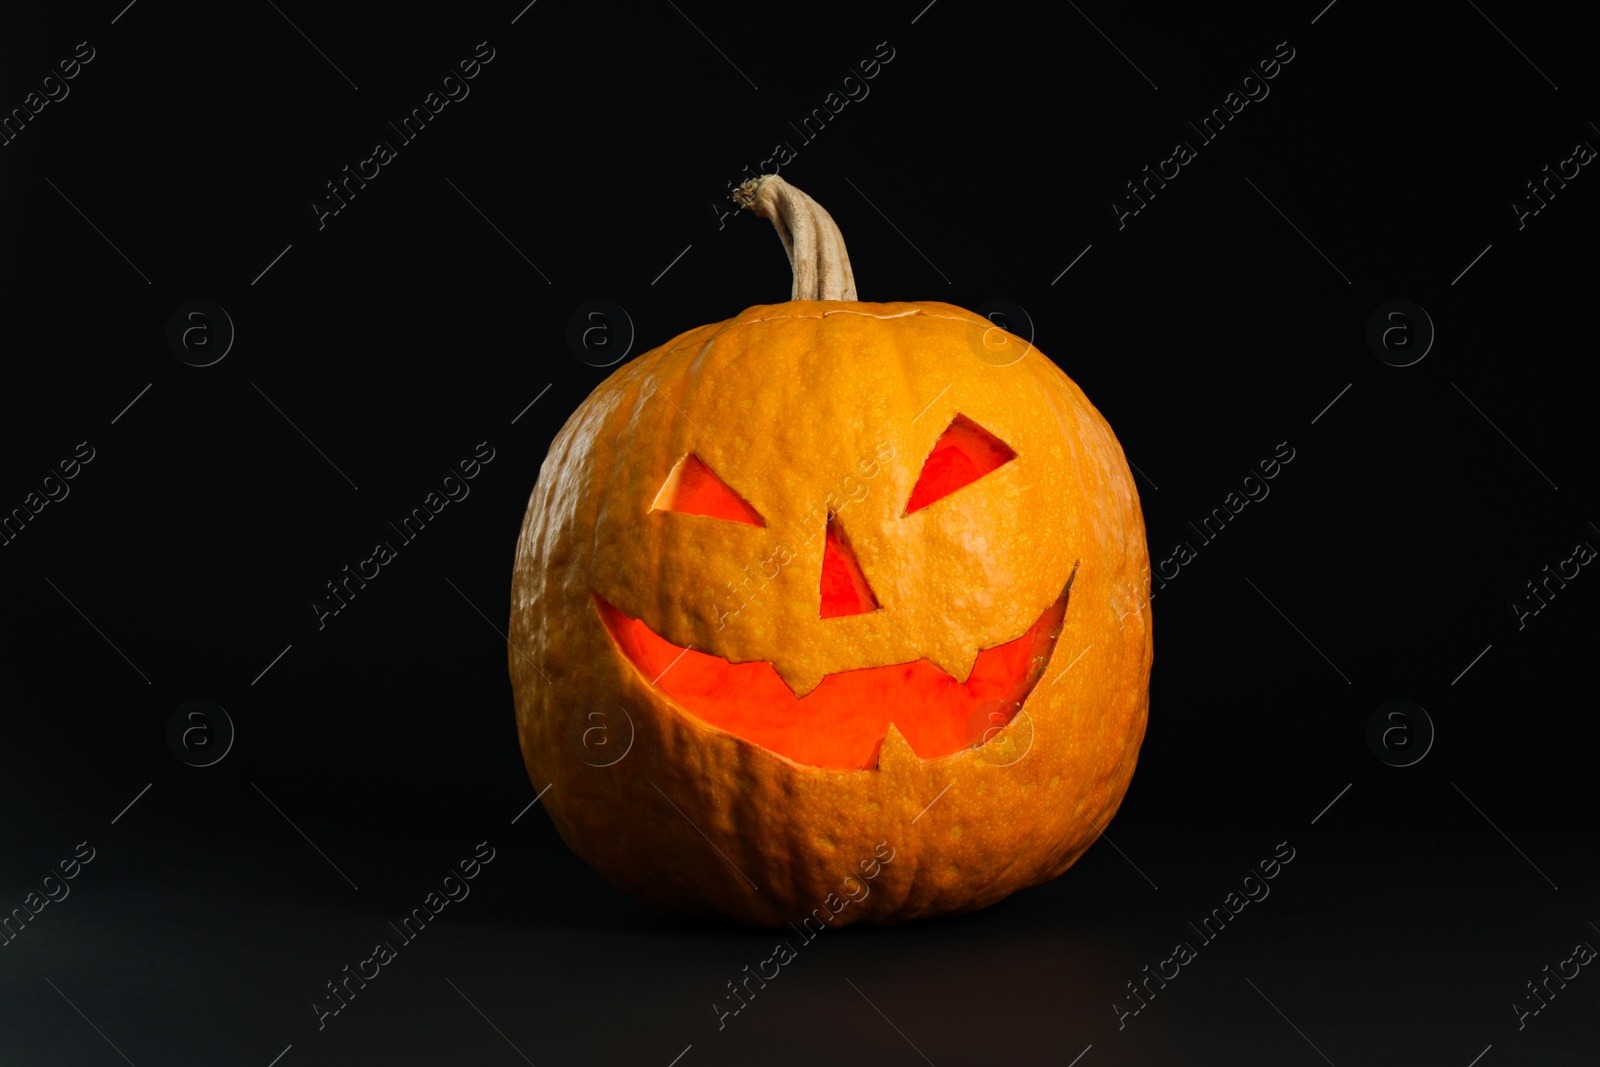 Photo of Pumpkin head on black background. Jack lantern - traditional Halloween decor